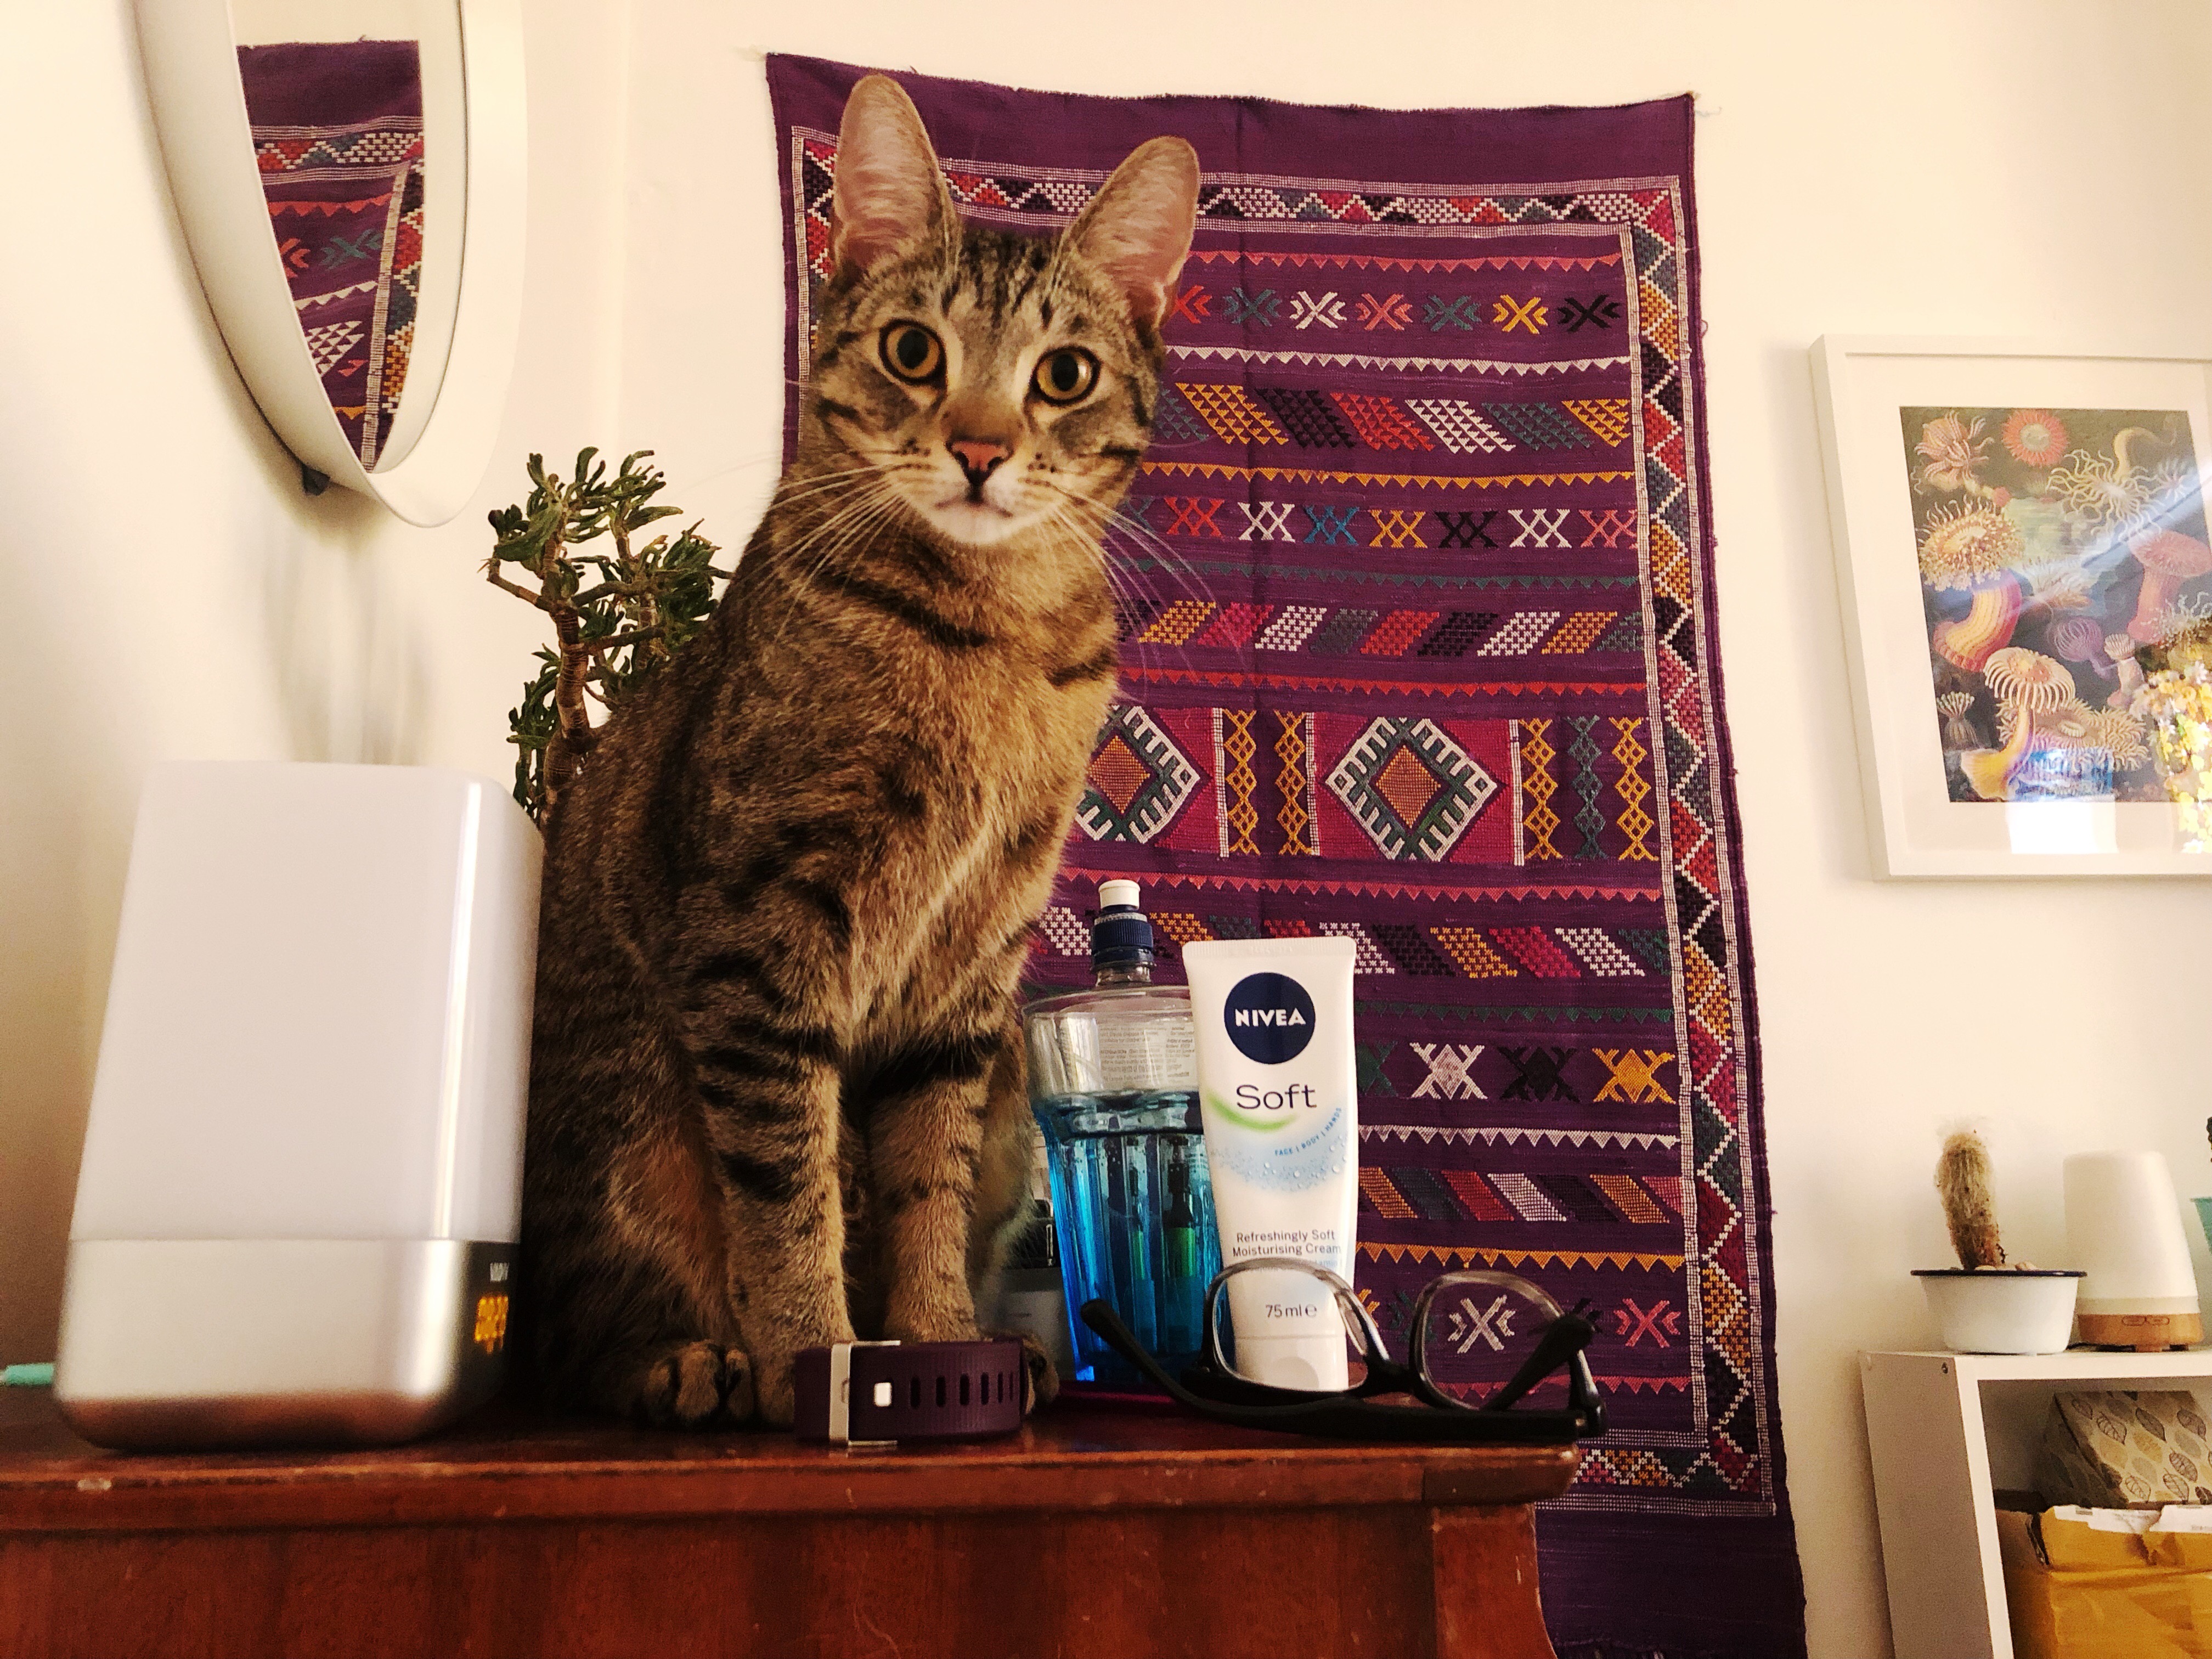 cat on dresser